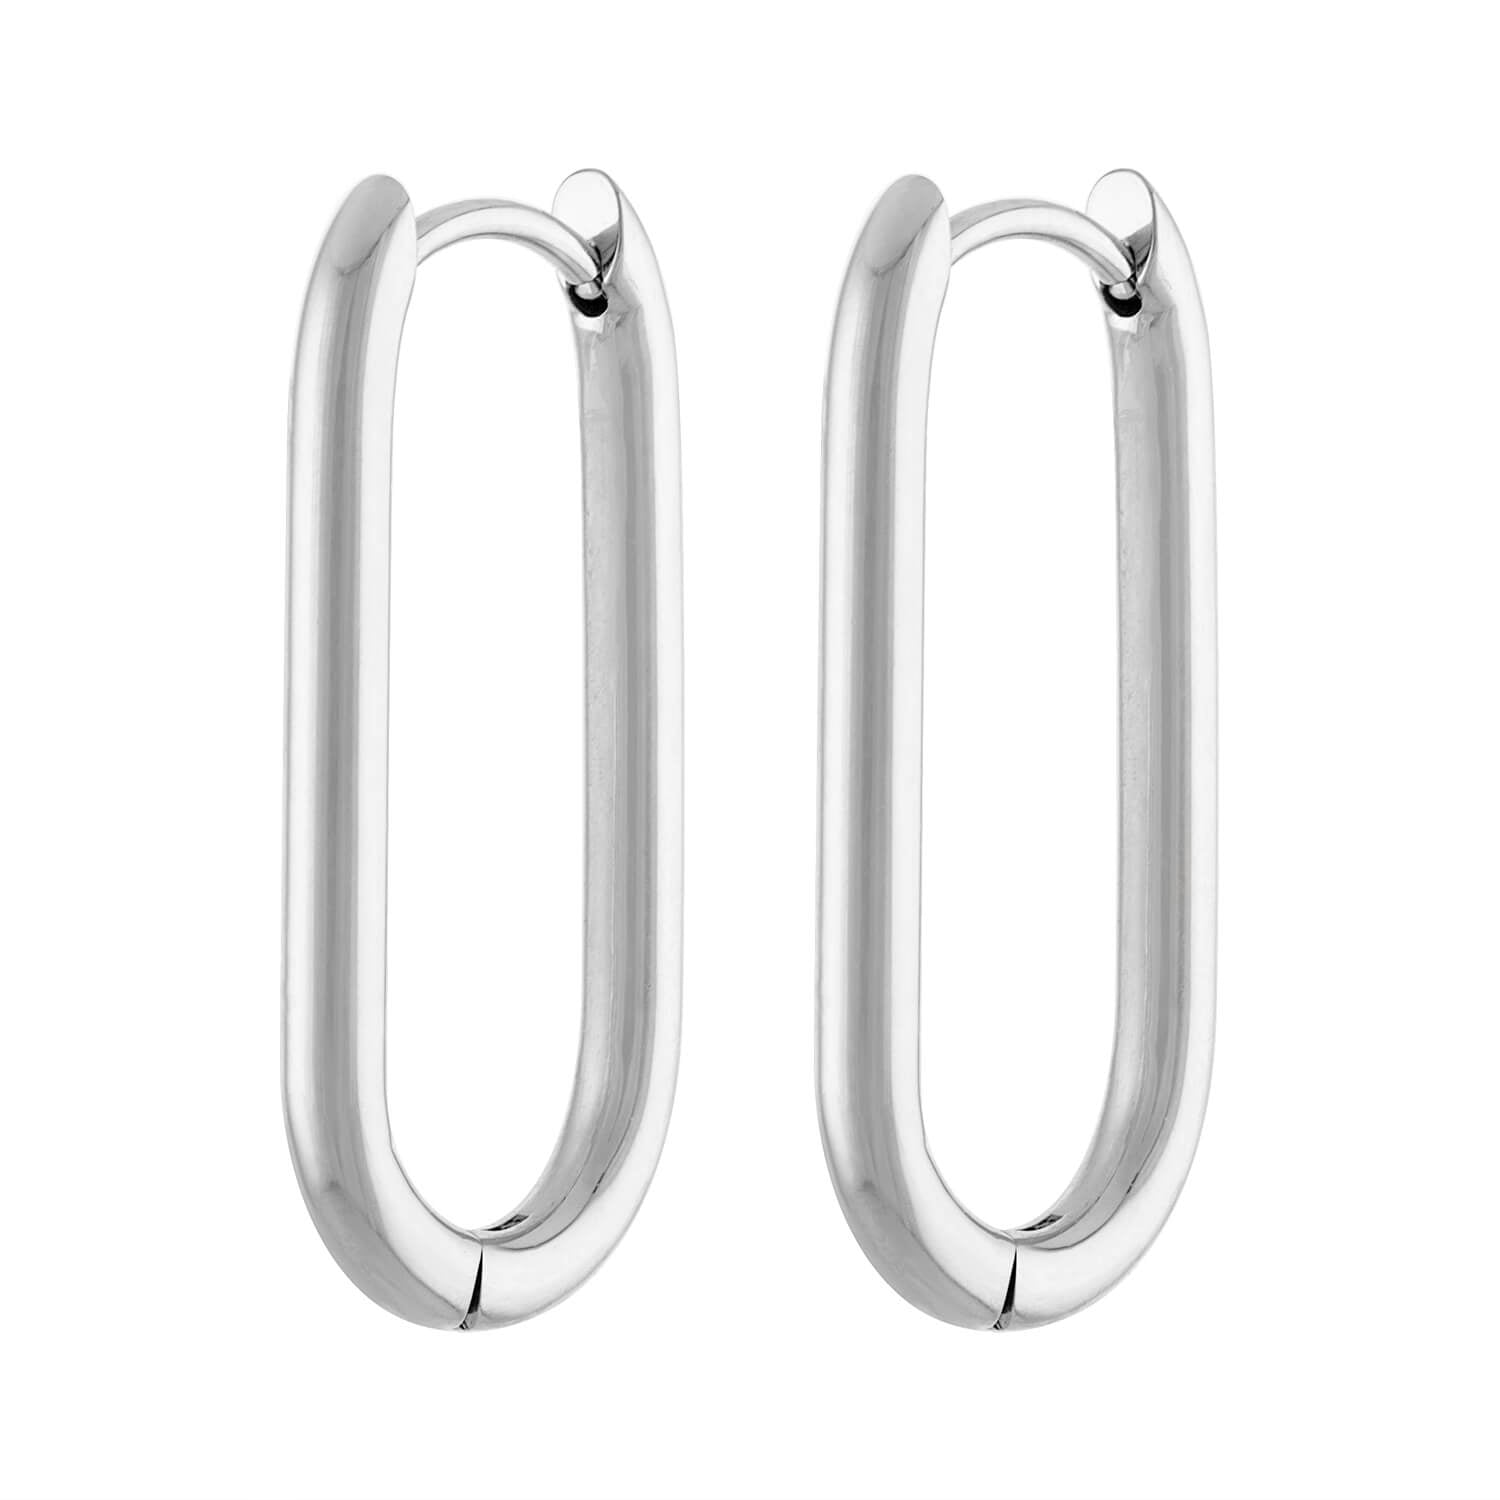 Halo Oval Hoop Earrings in Titanium (Silver)